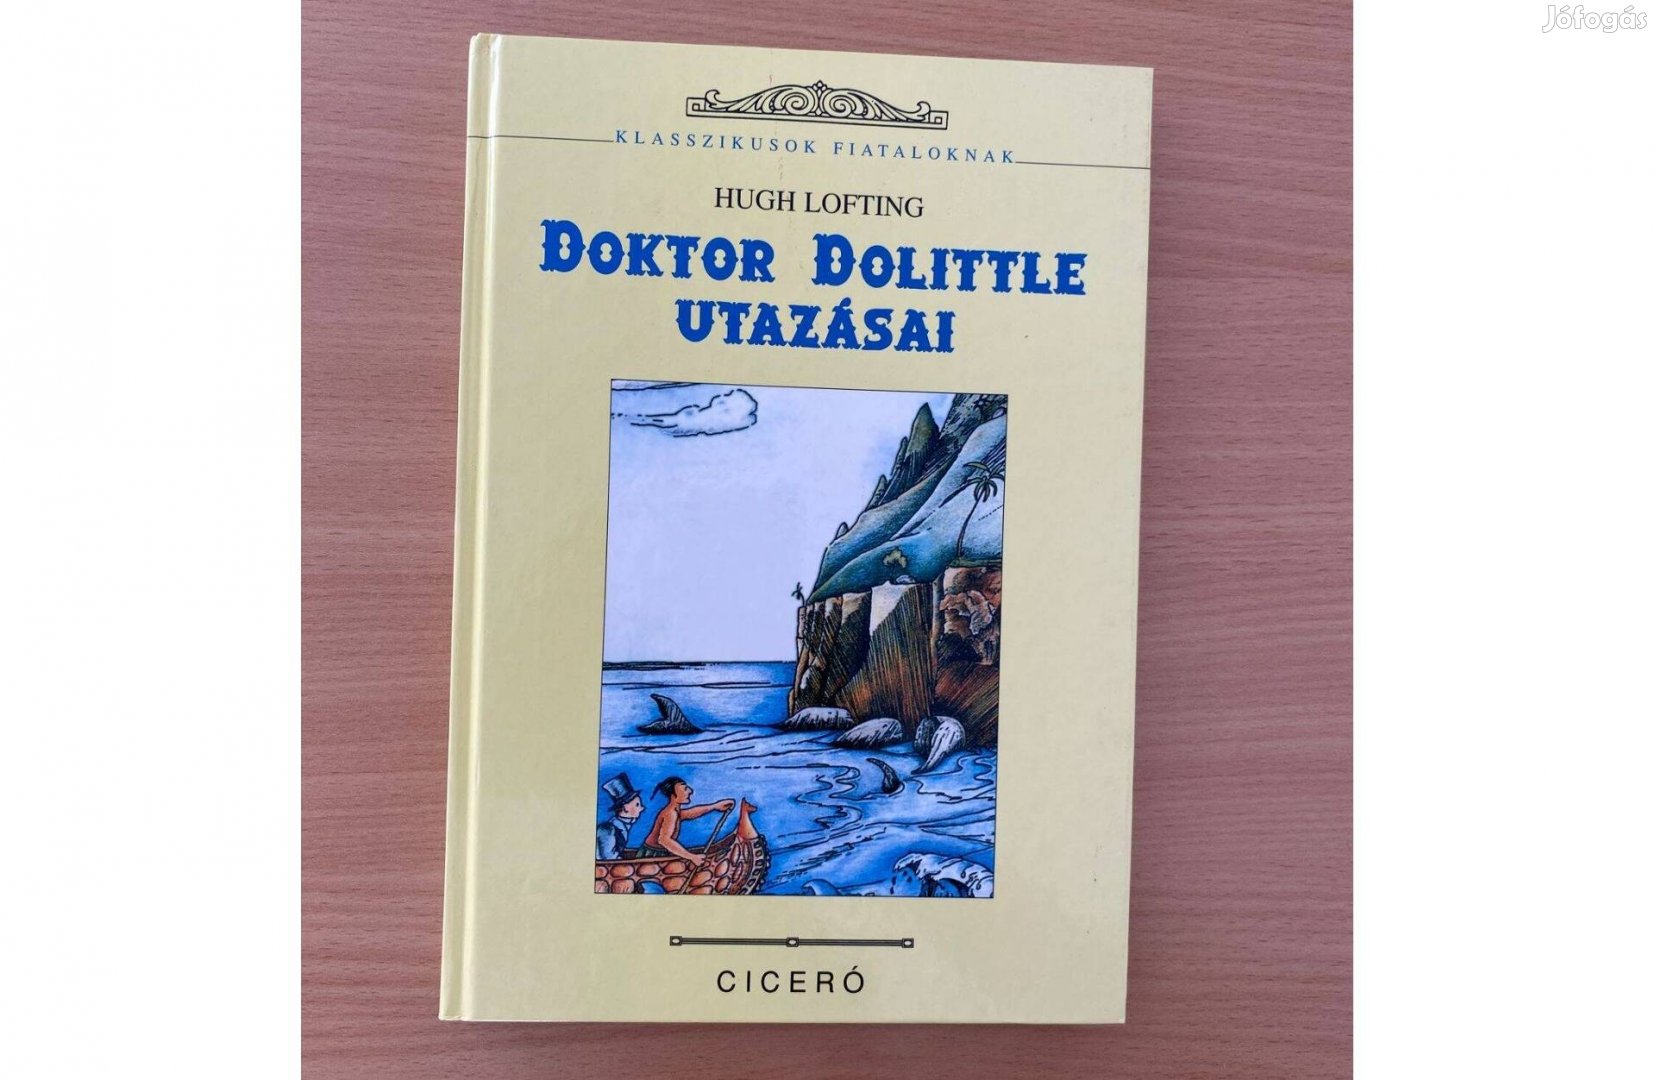 Hugh Lofting: Doktor Dolittle utazásai című könyv